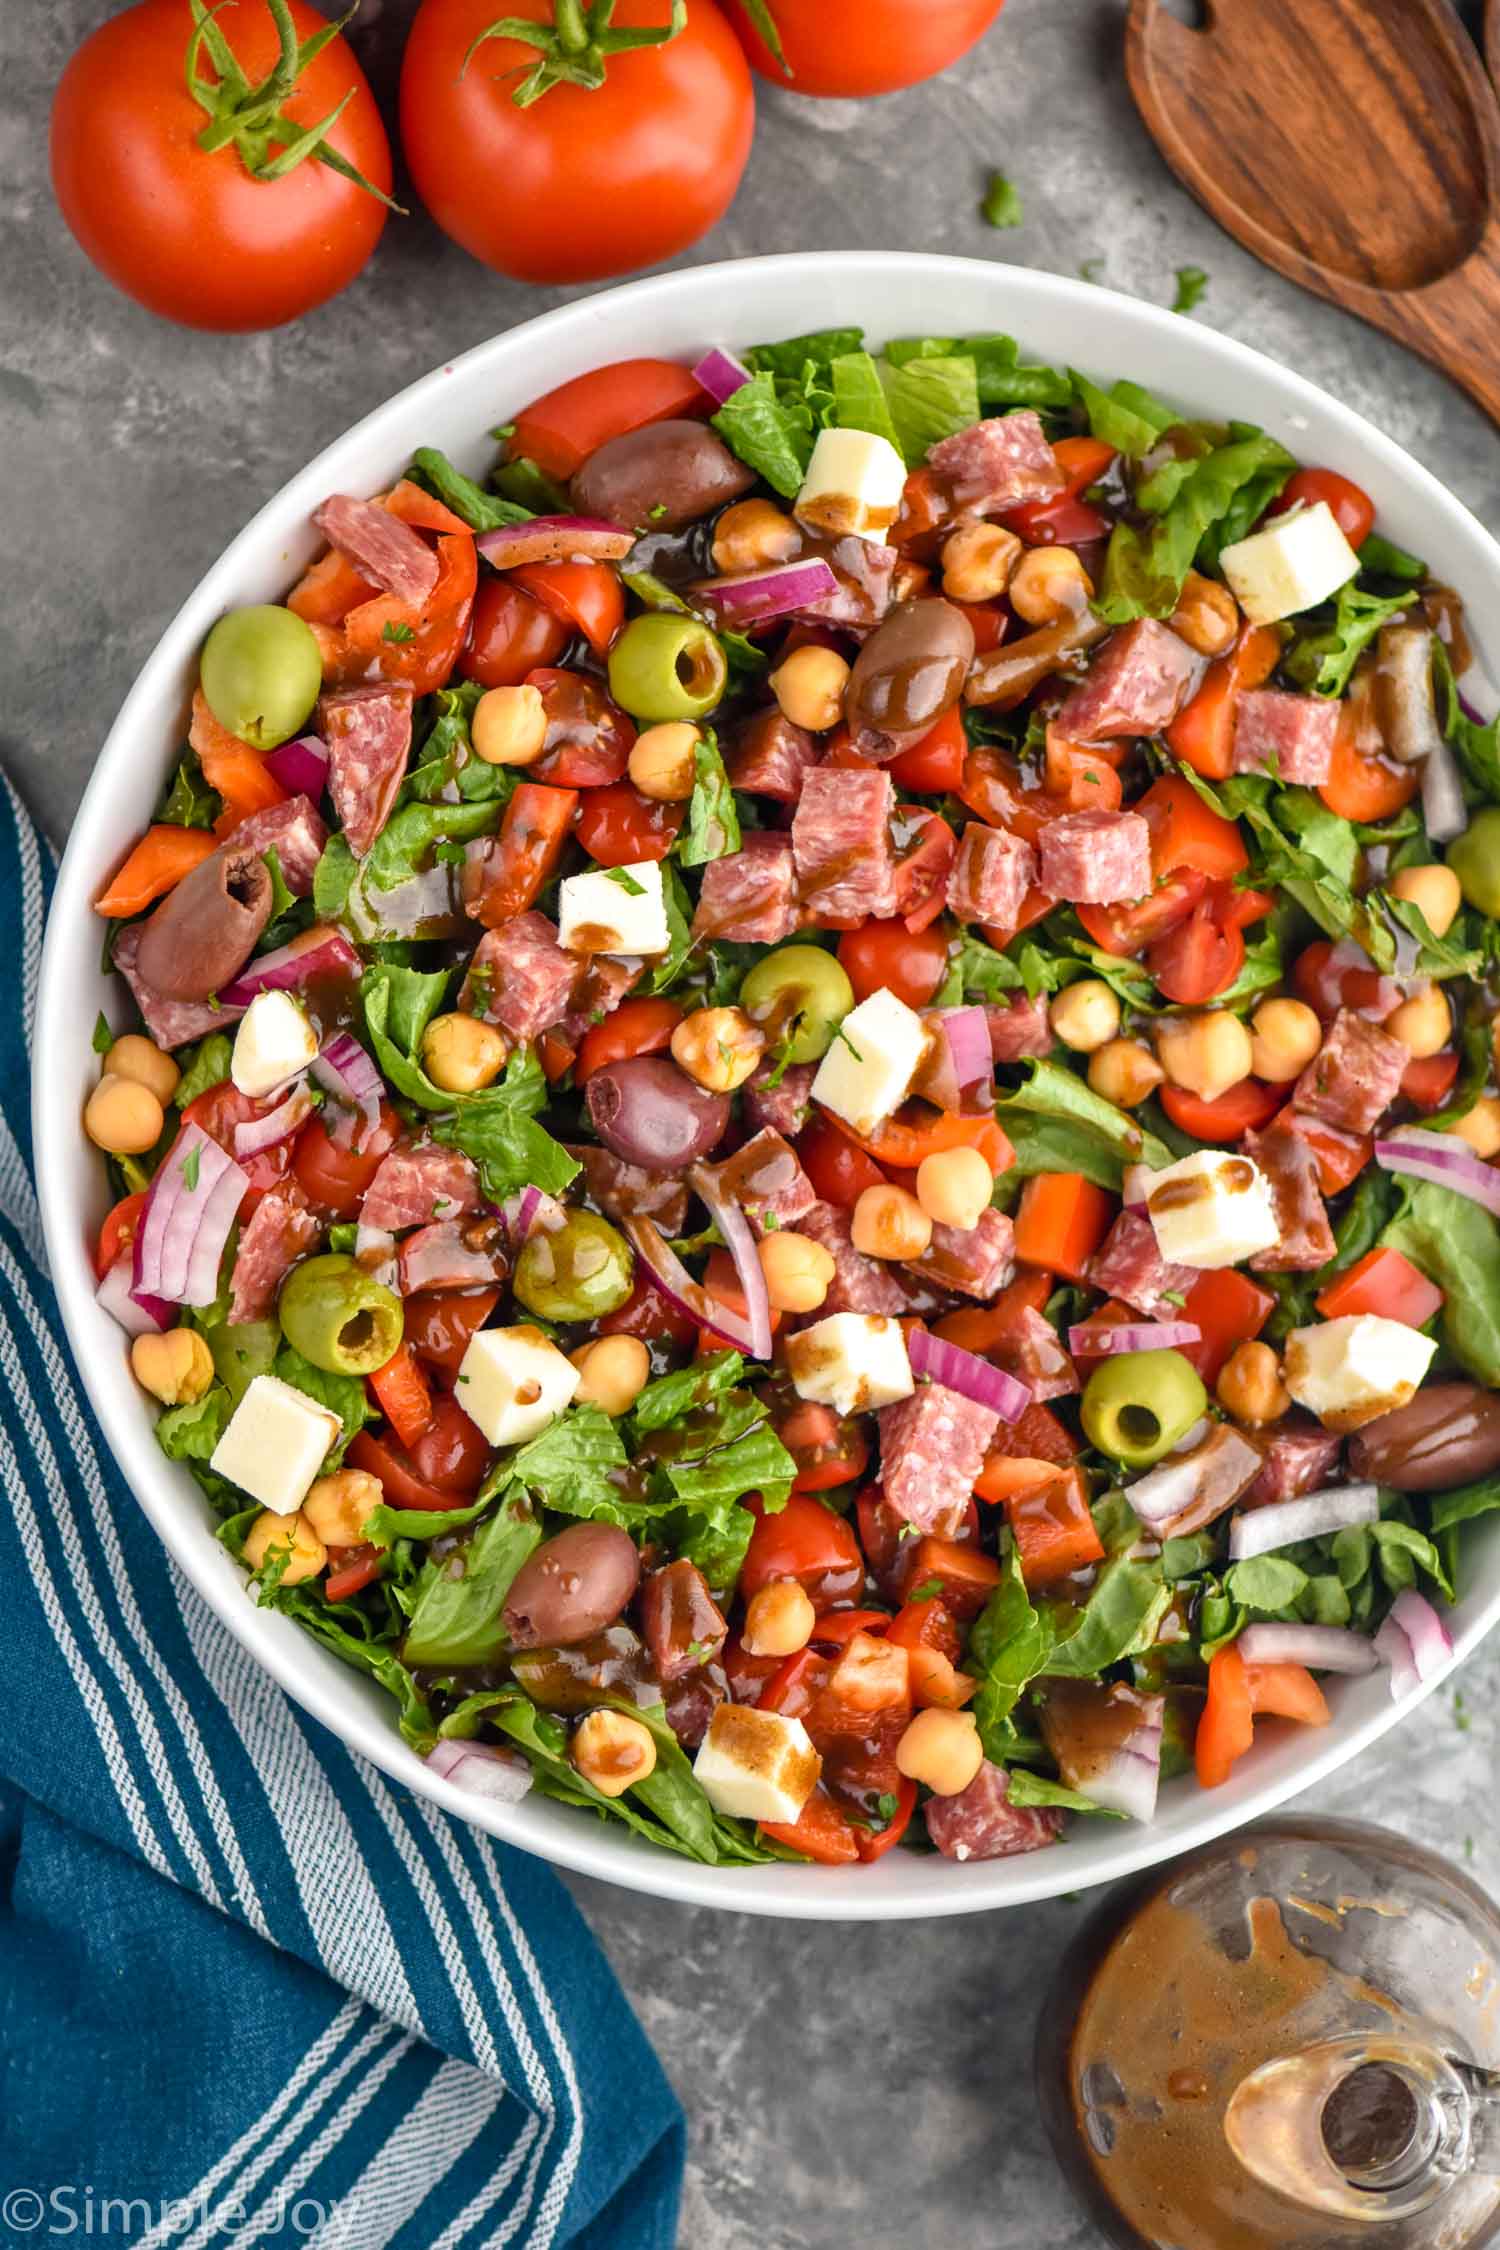 https://www.simplejoy.com/wp-content/uploads/2022/11/italian-chopped-salad.jpg